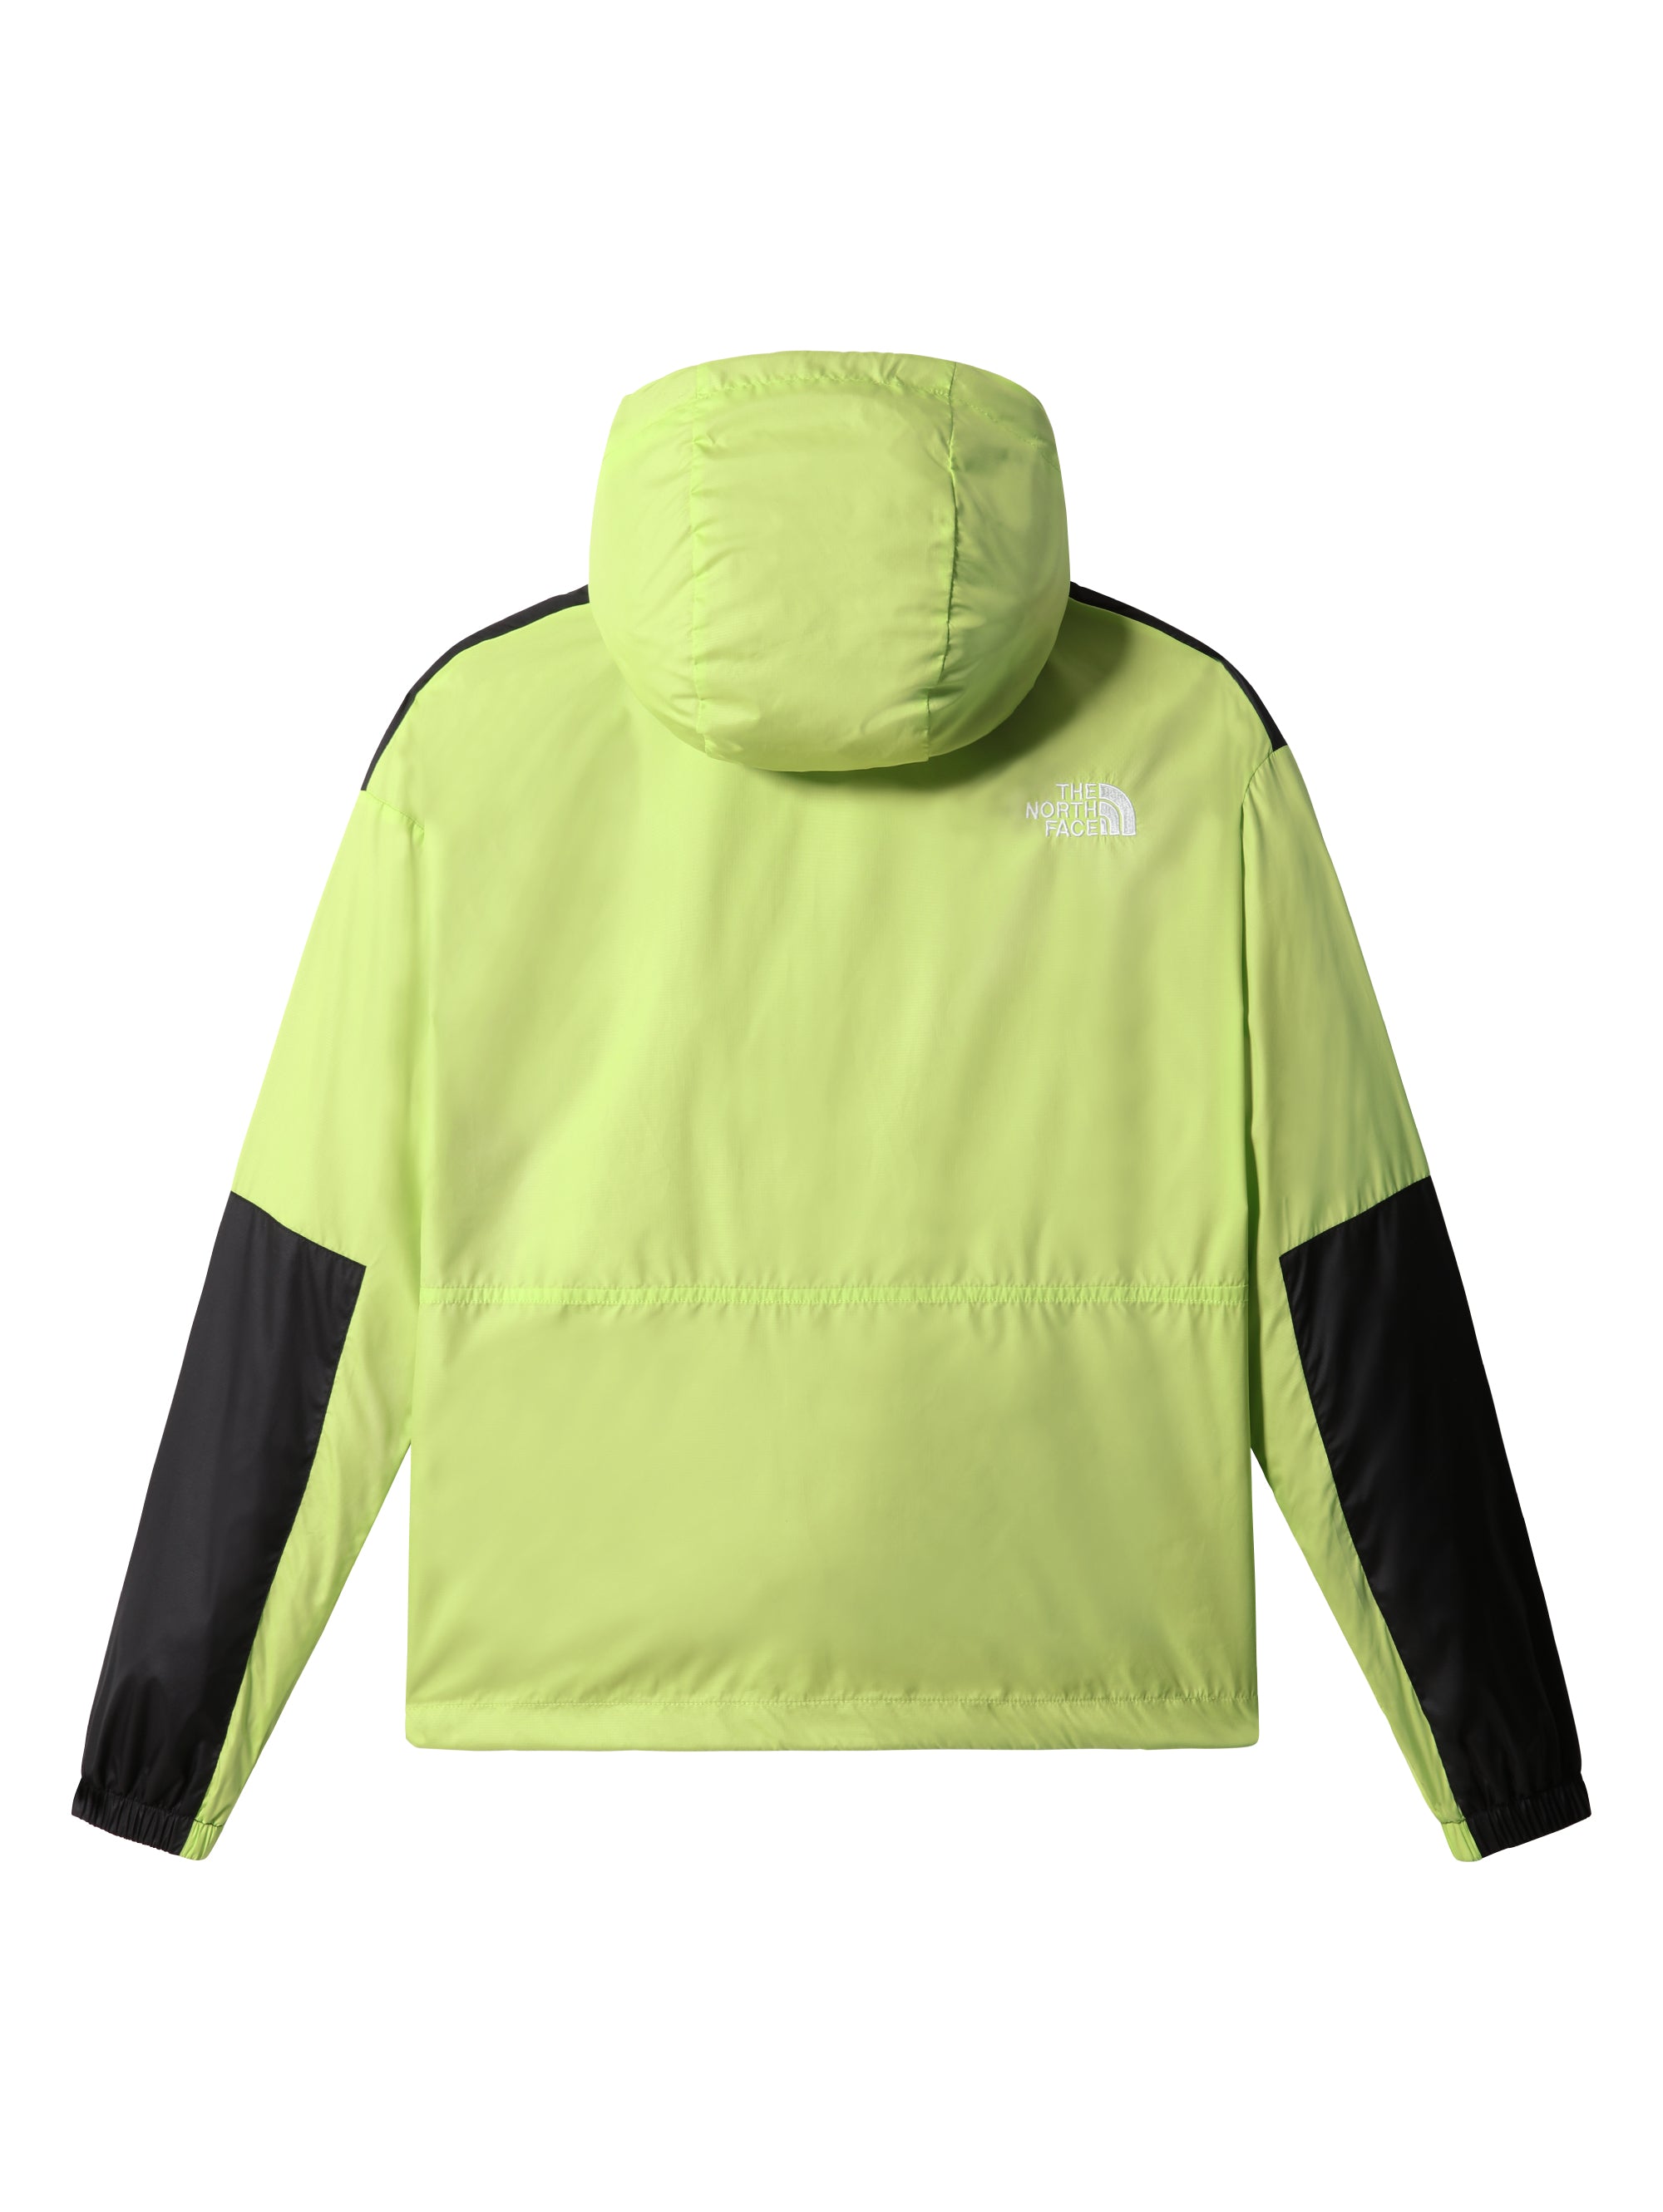 Sheru Color Block Jacket with Green Hood